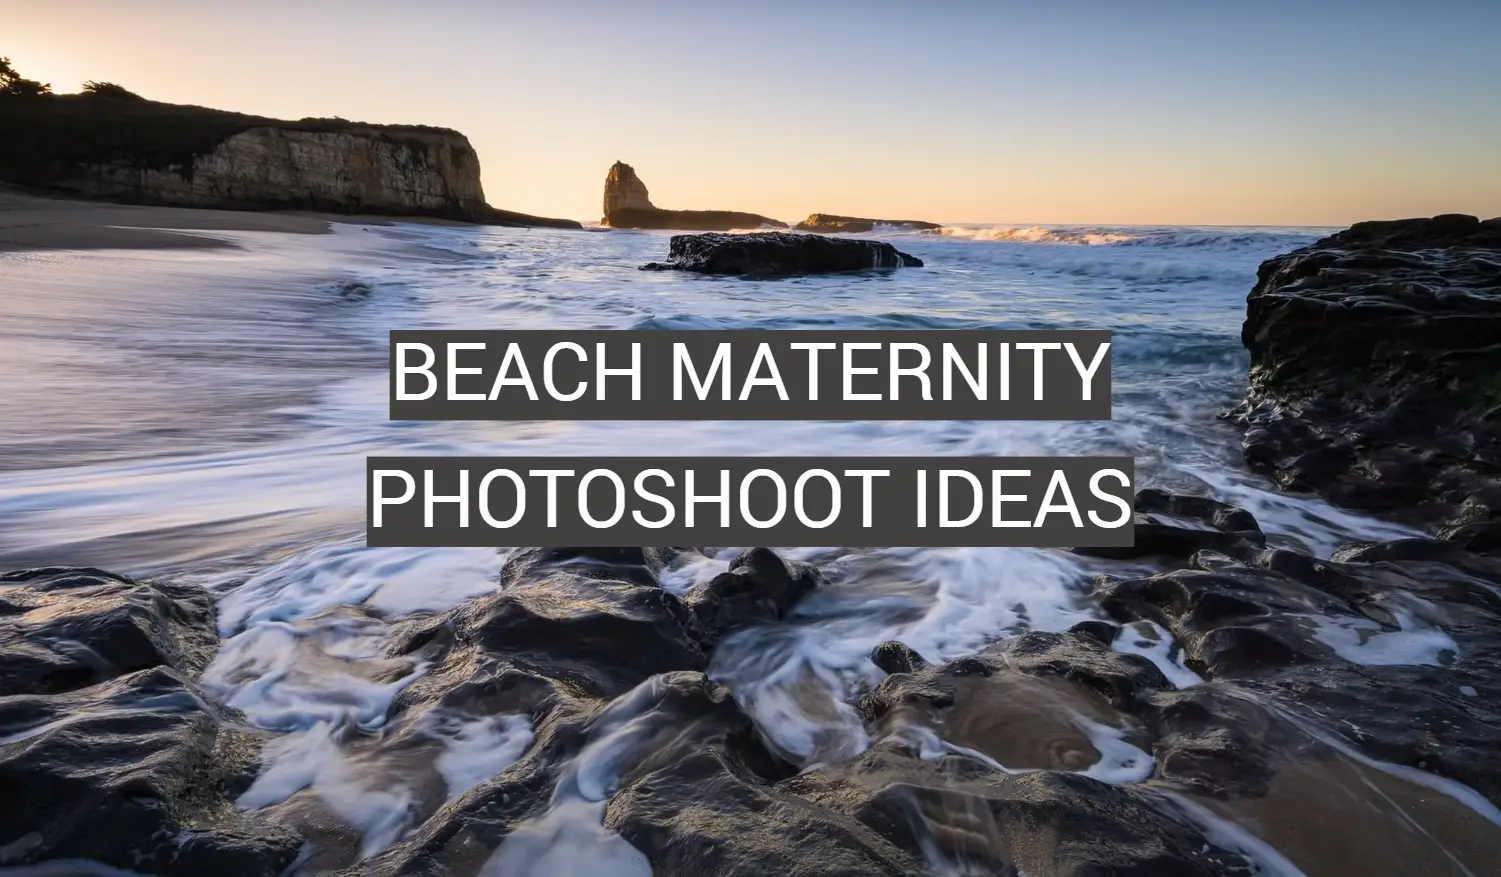 Beach Maternity Photoshoot Ideas